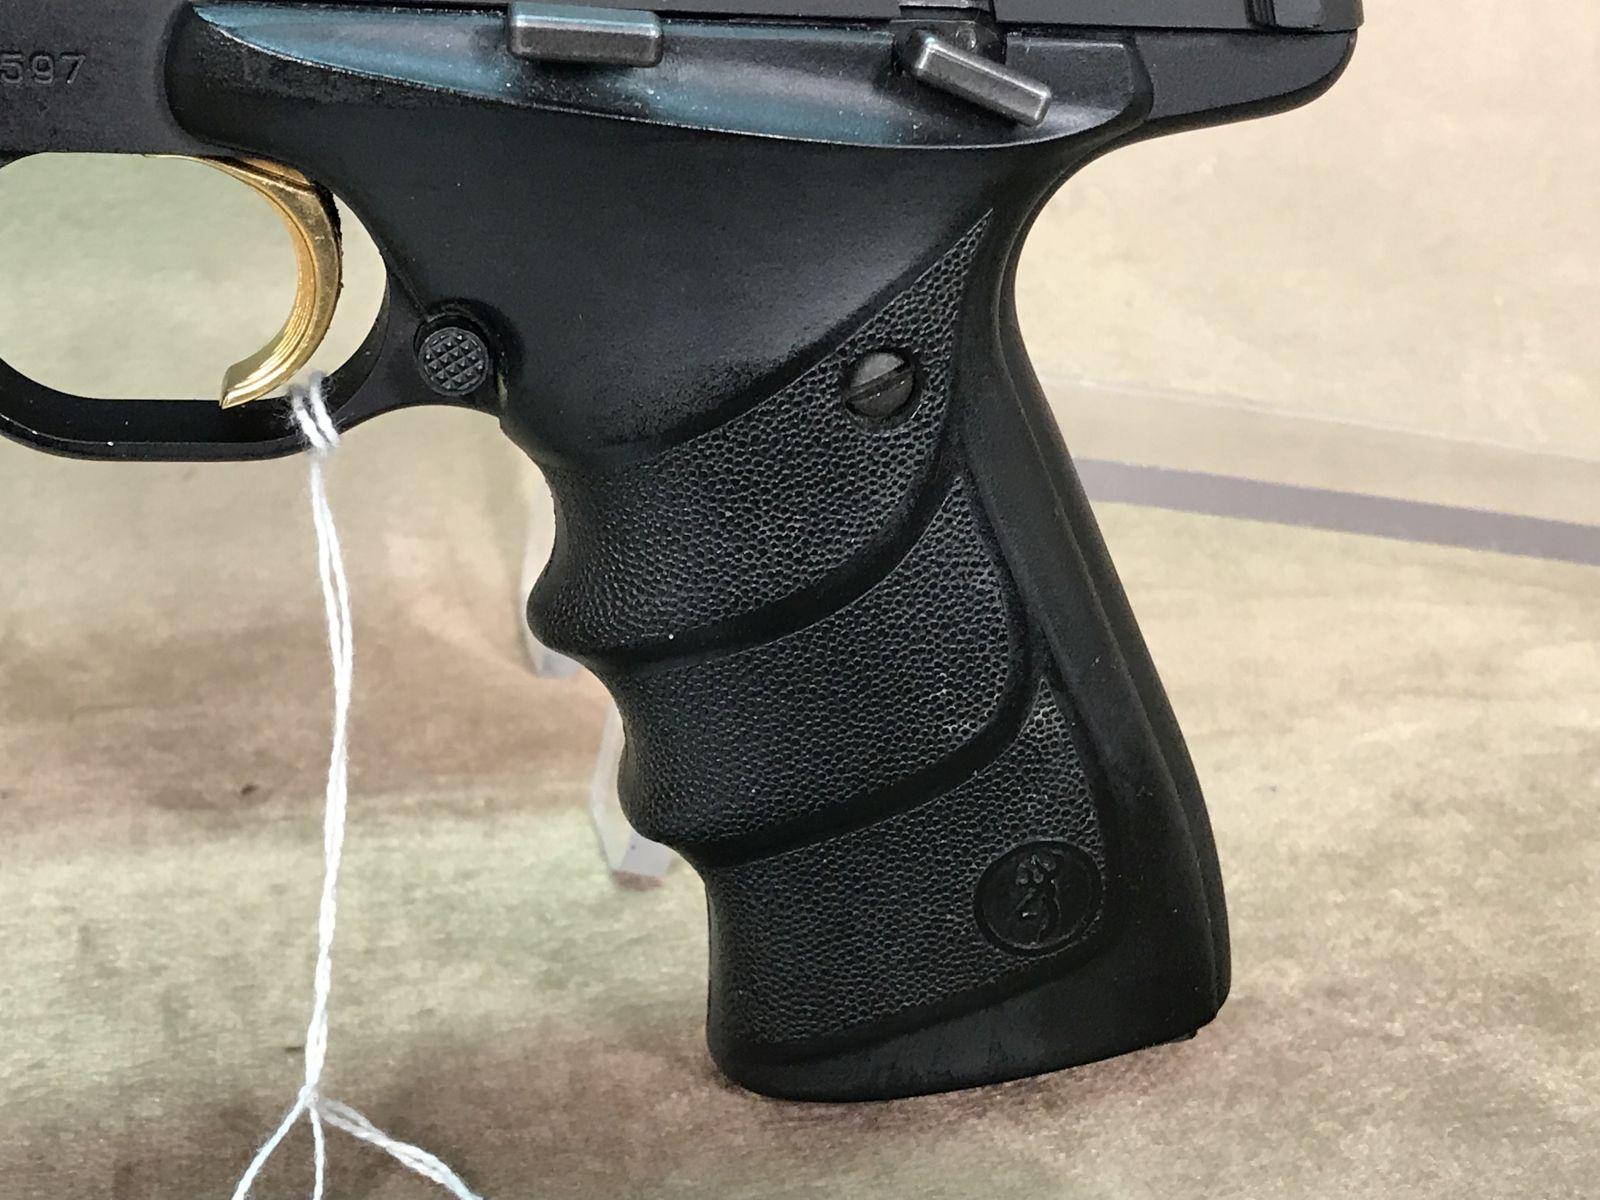 25. Browning Buck Mark .22LR, Case SN:515ZX09597